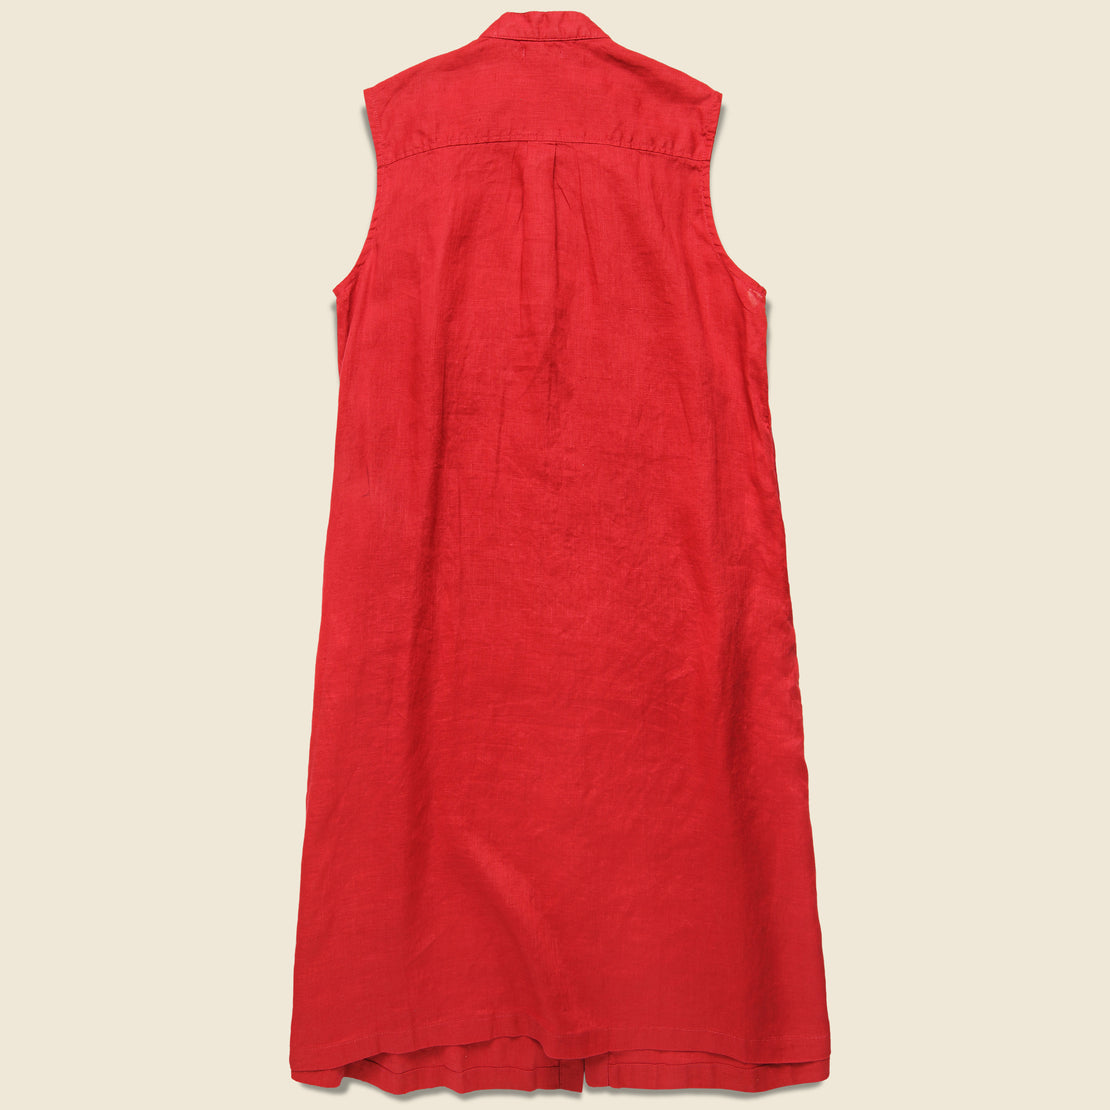 Ellen Sleeveless Button Front Dress - Coquelico